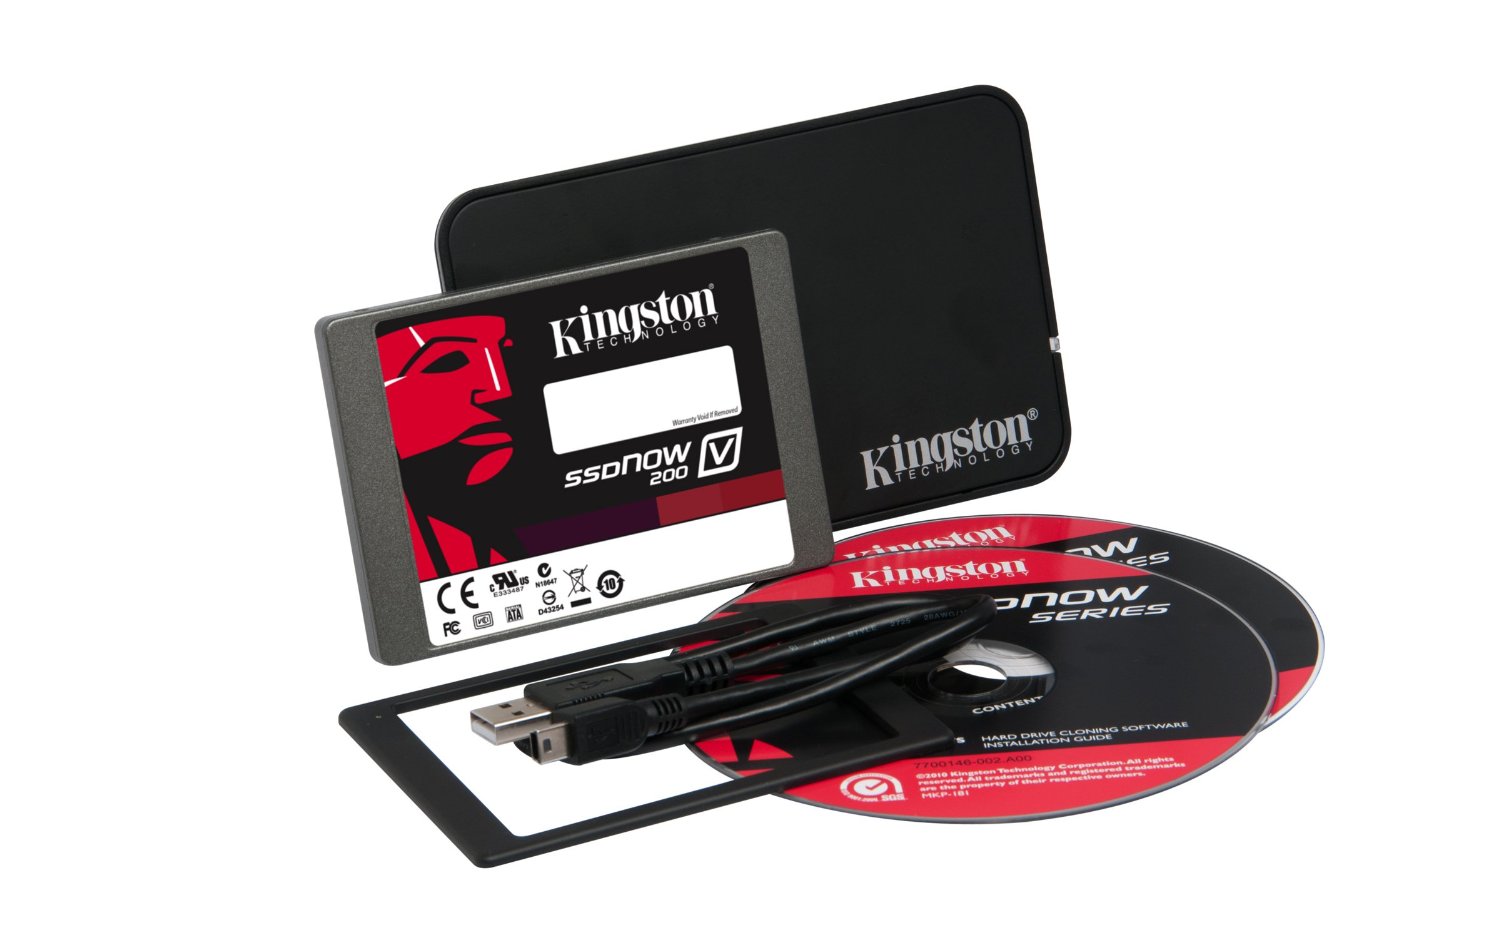 Kingston SSDNow V200 64 GB SATA III 6 GB/s 2.5-Inch Notebook Bundle - SV200S3N7A/64G  $64.18